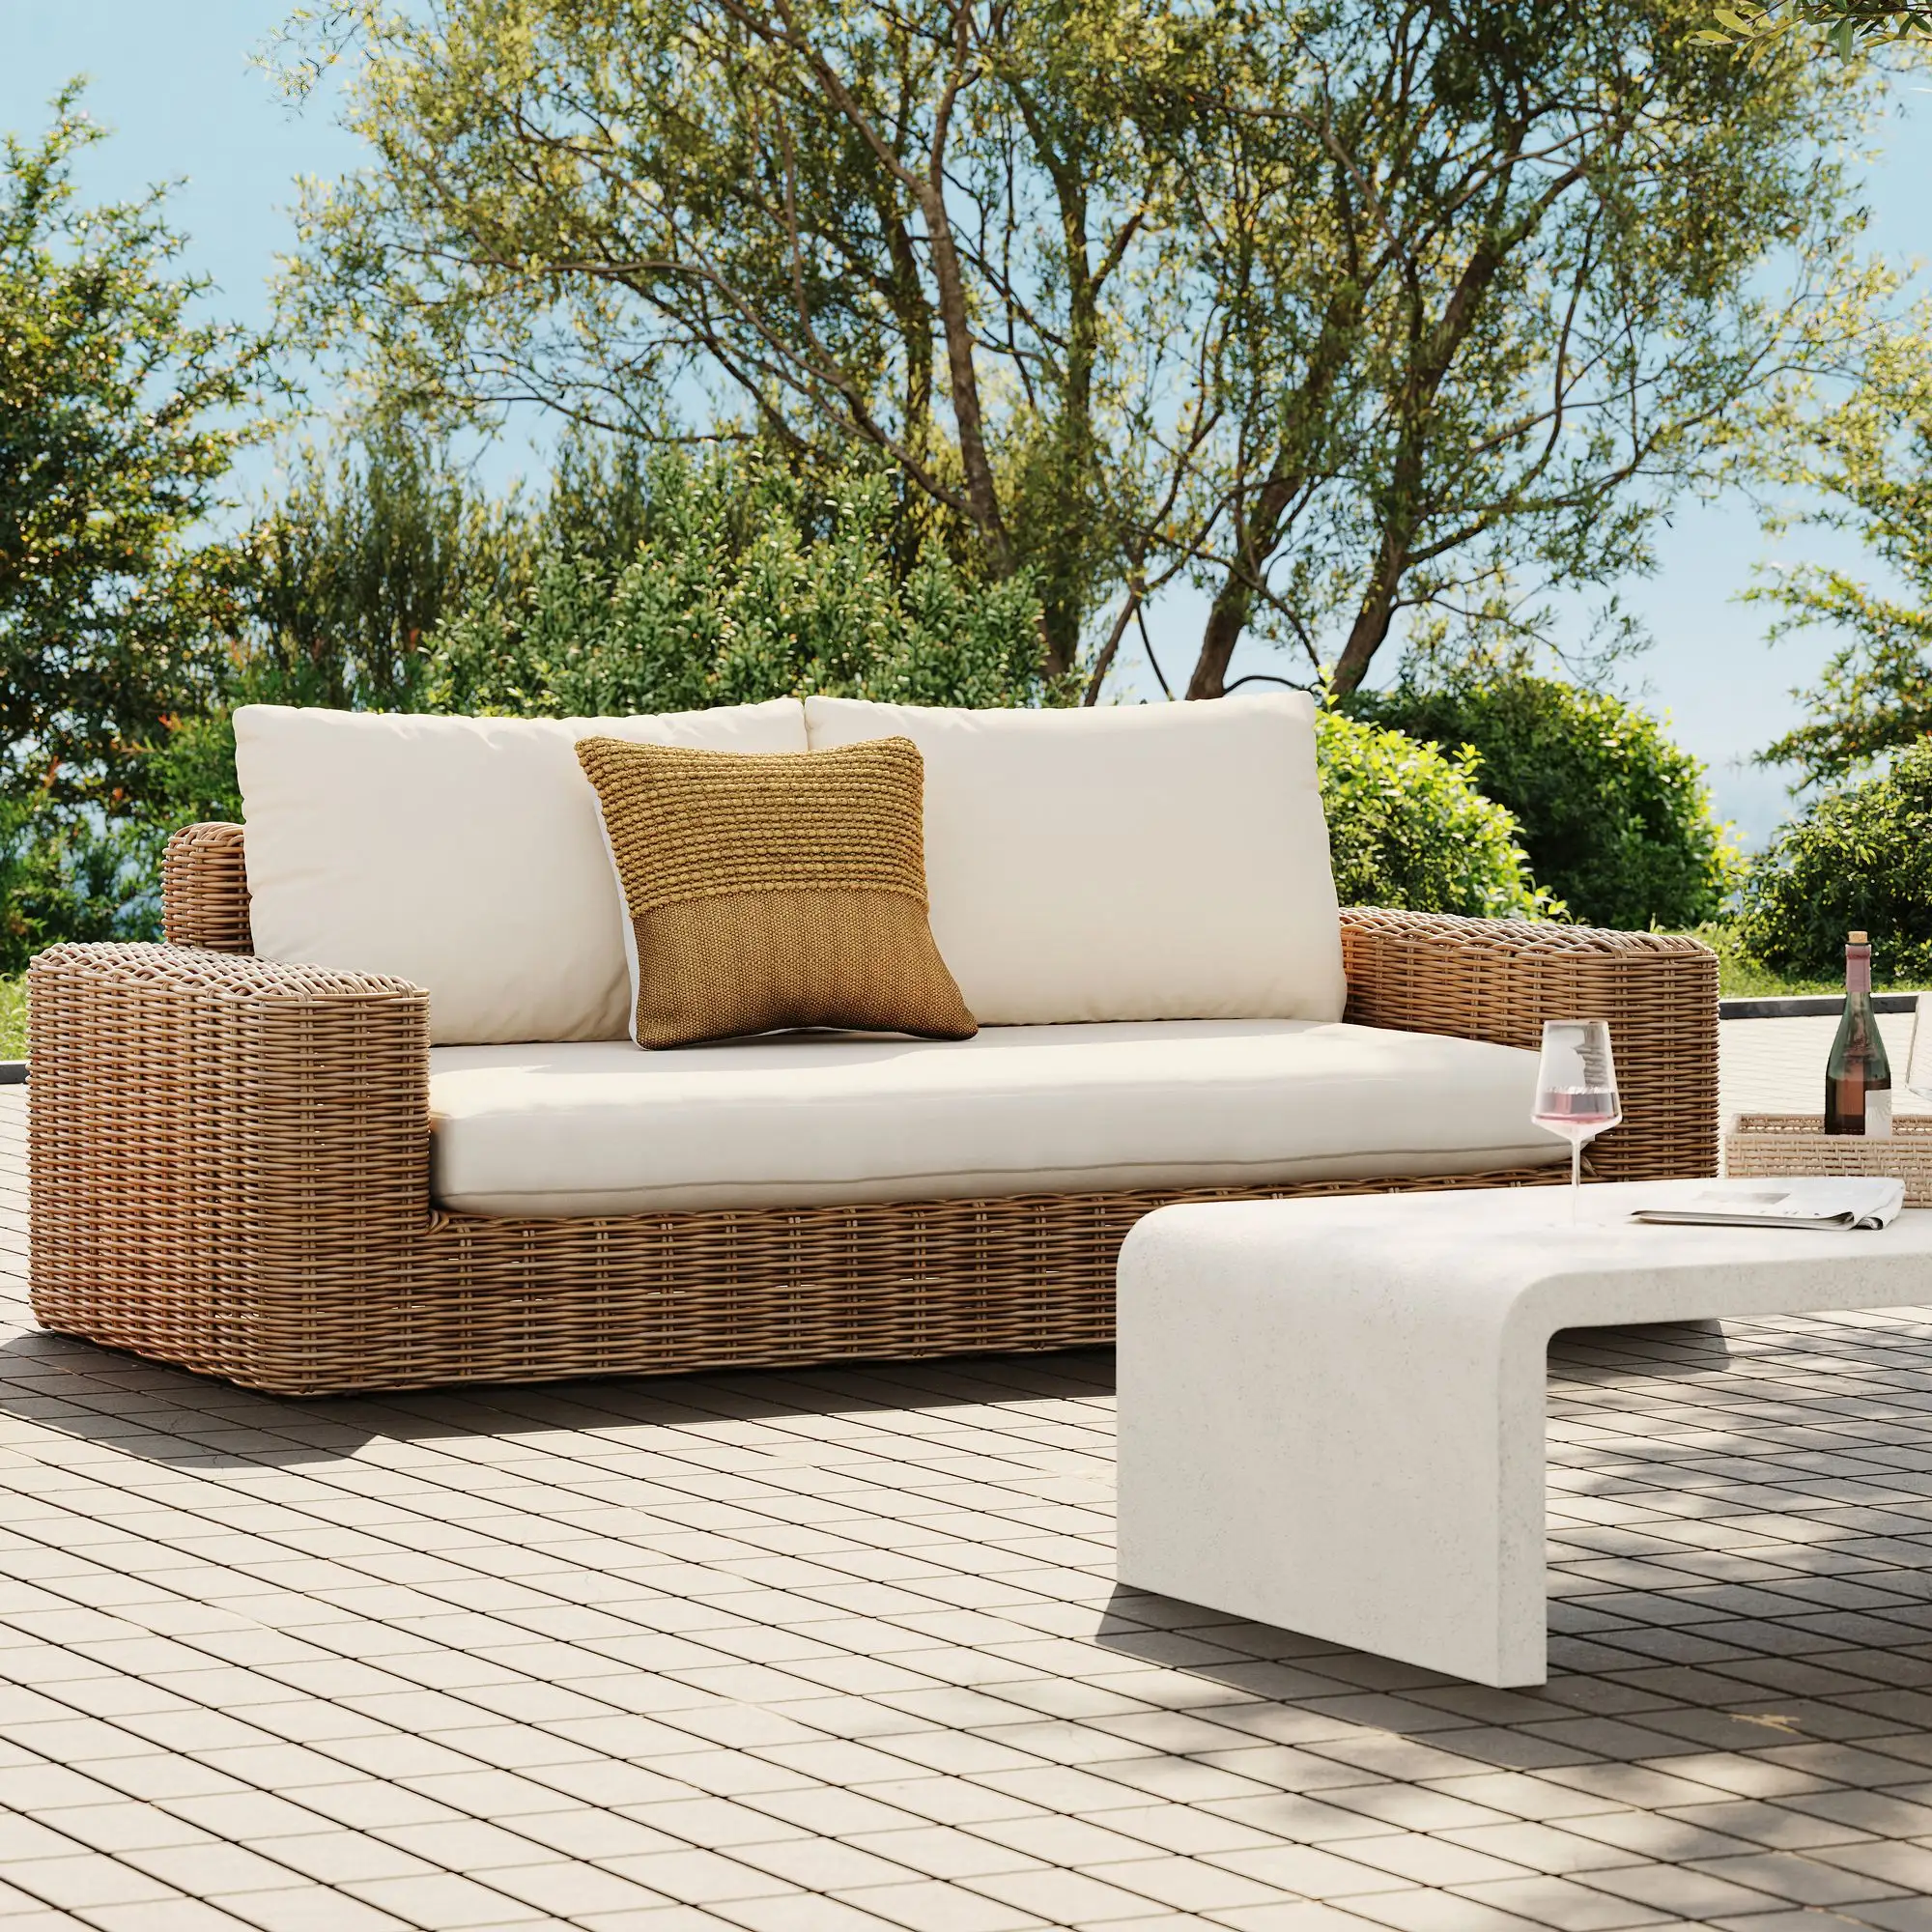 Design unico nuovo arrivo giardino Rattan tessuto divano set nuovo Design Rattan divano per Patio e giardino